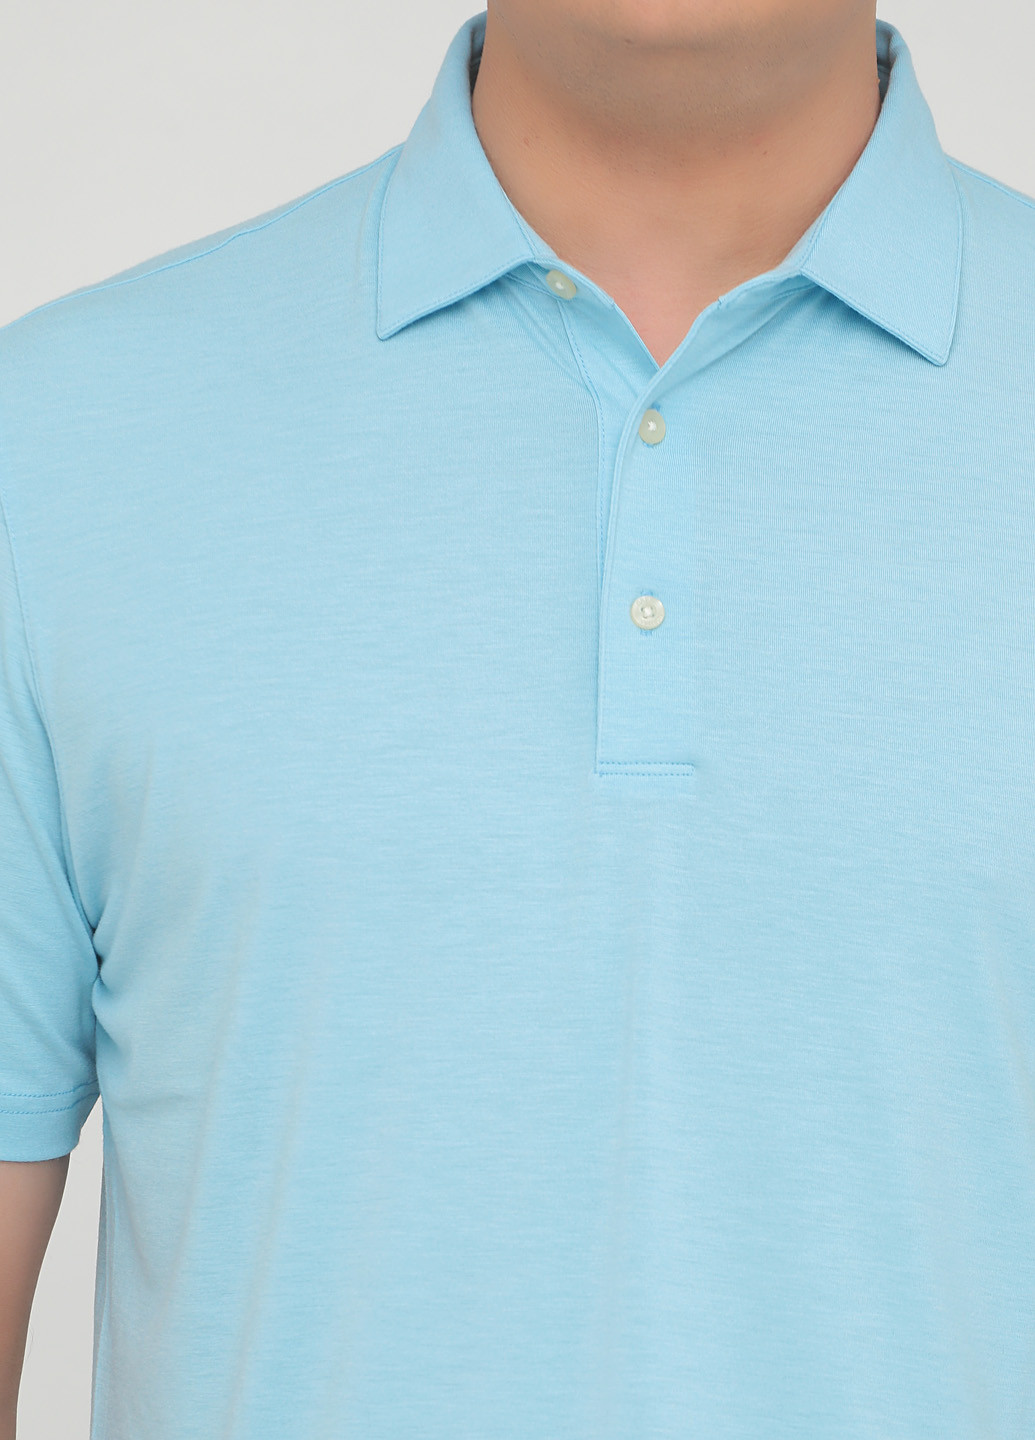 Голубой футболка-поло для мужчин Greg Norman меланжевая